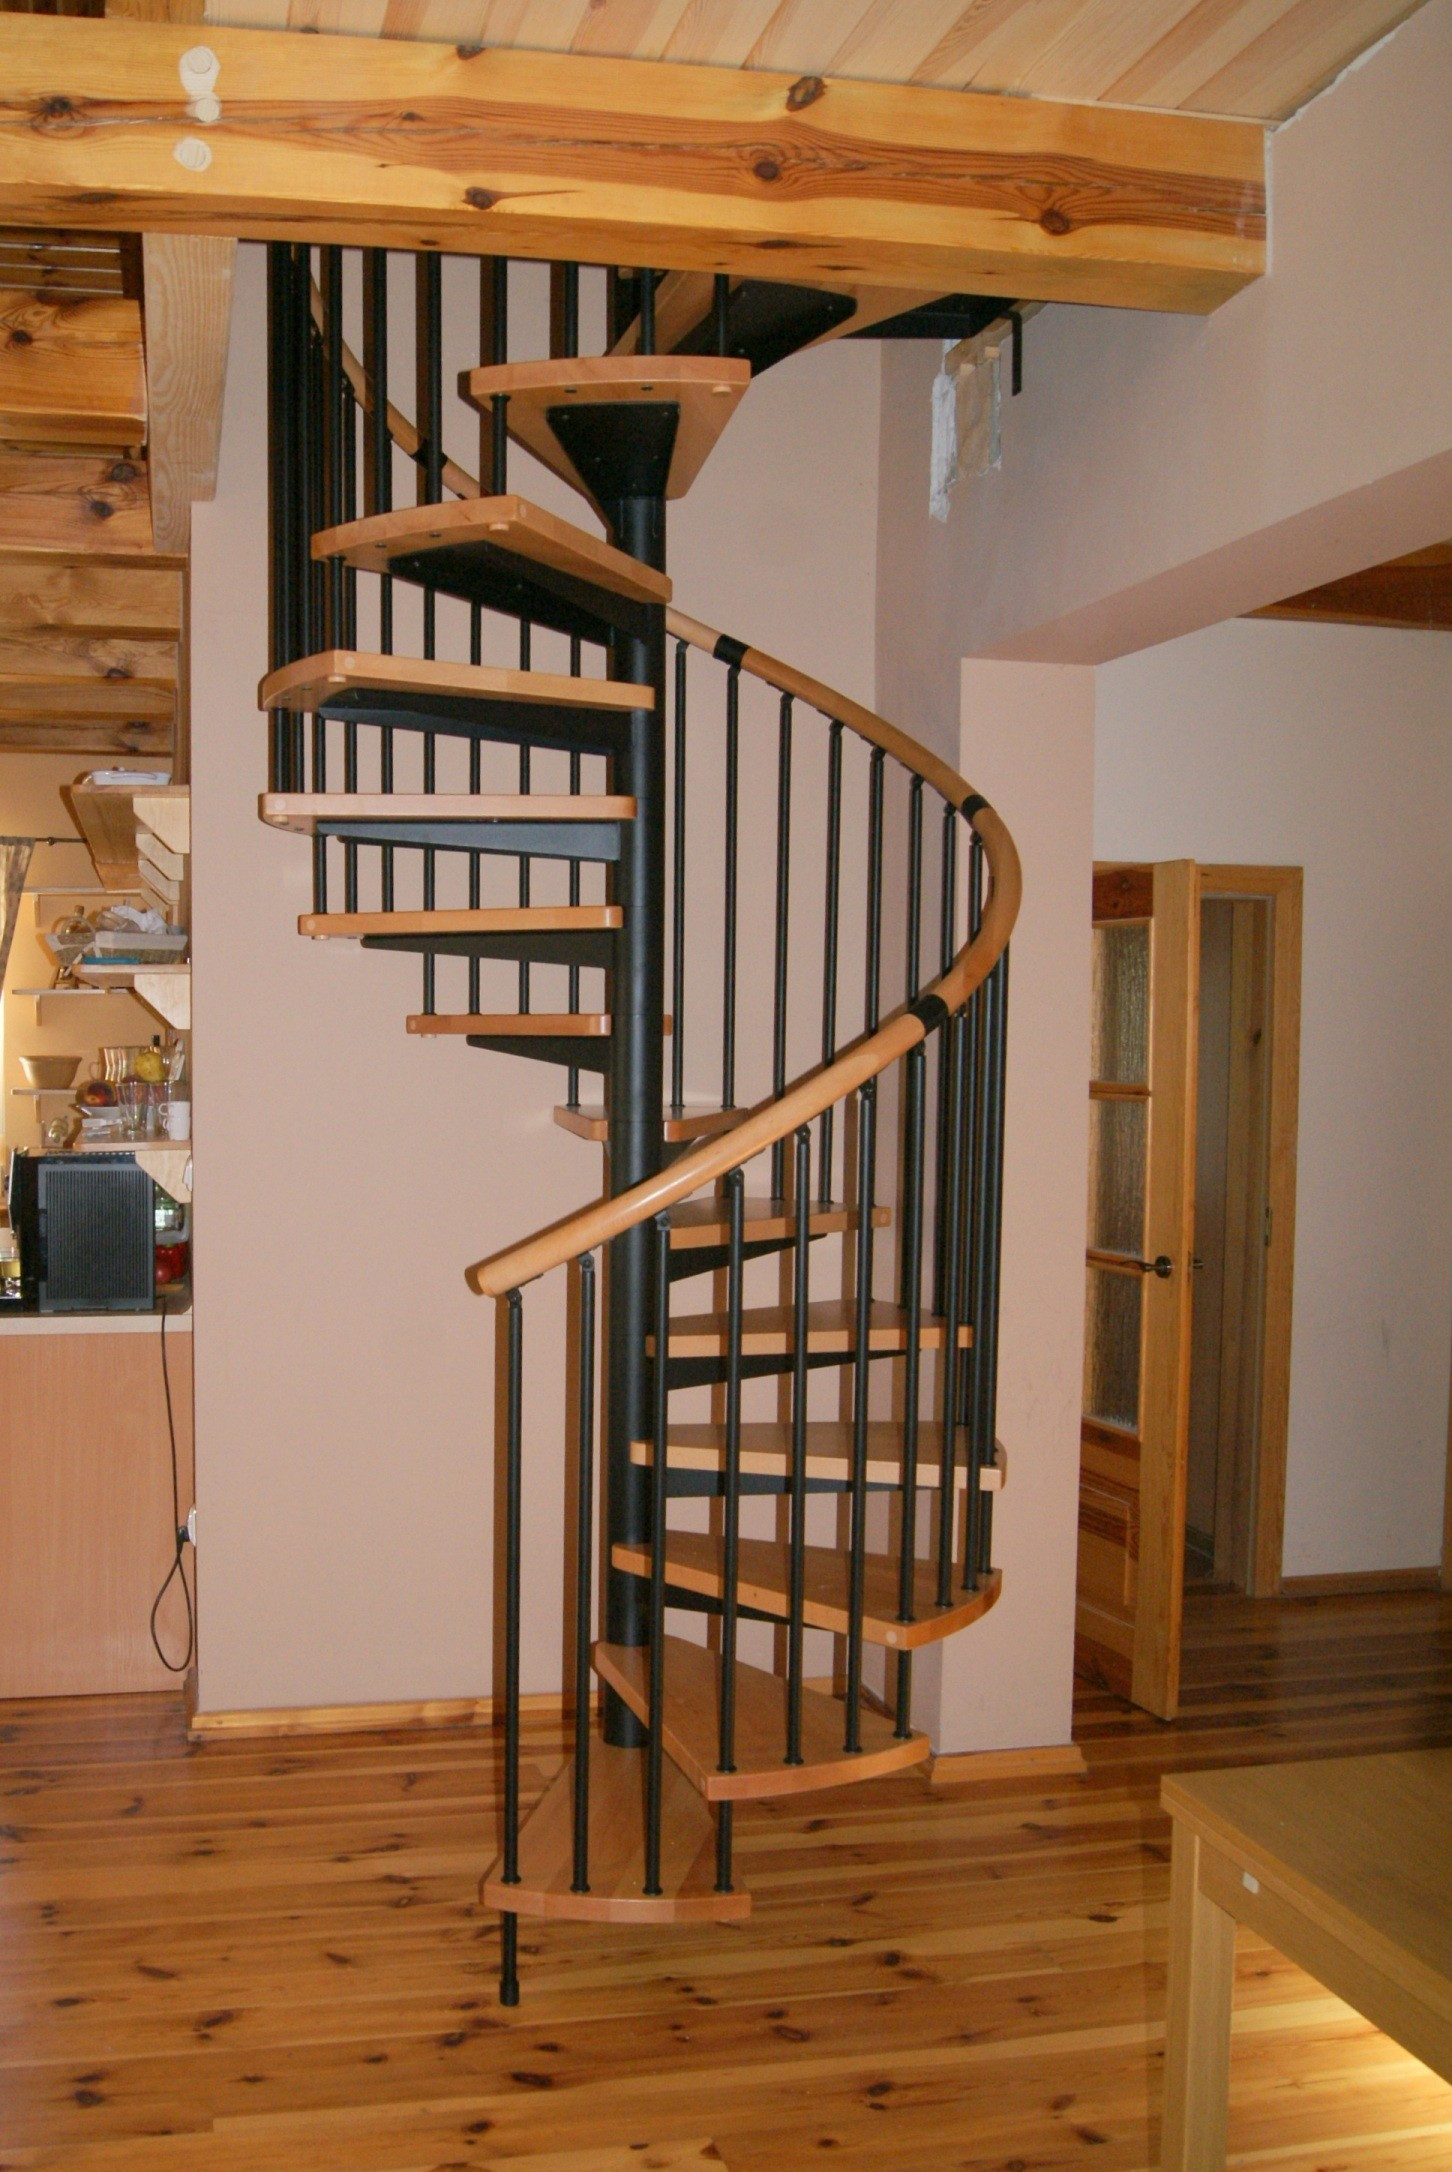 hardwood floor stair landing of stairs winding duda model oslo 02 s 110 cm schody24 net pl inside 00l